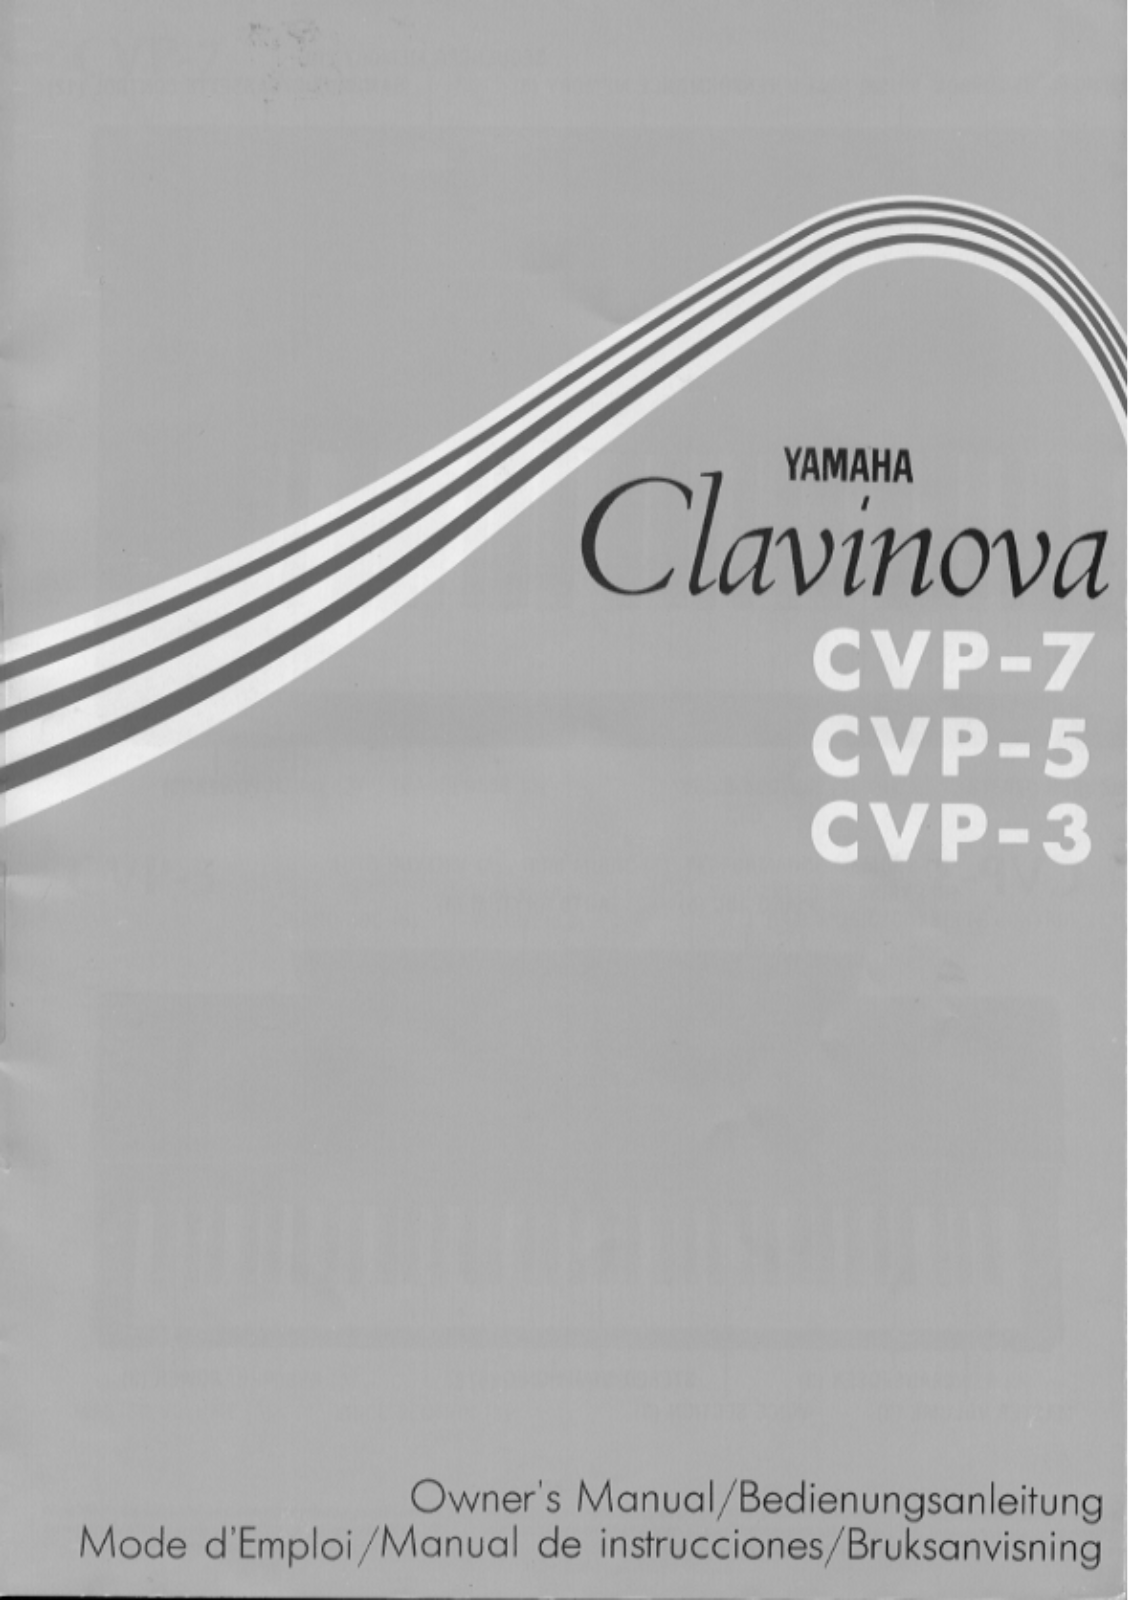 Yamaha CVP-5, CVP-7, CVP-3 Owner's Manual